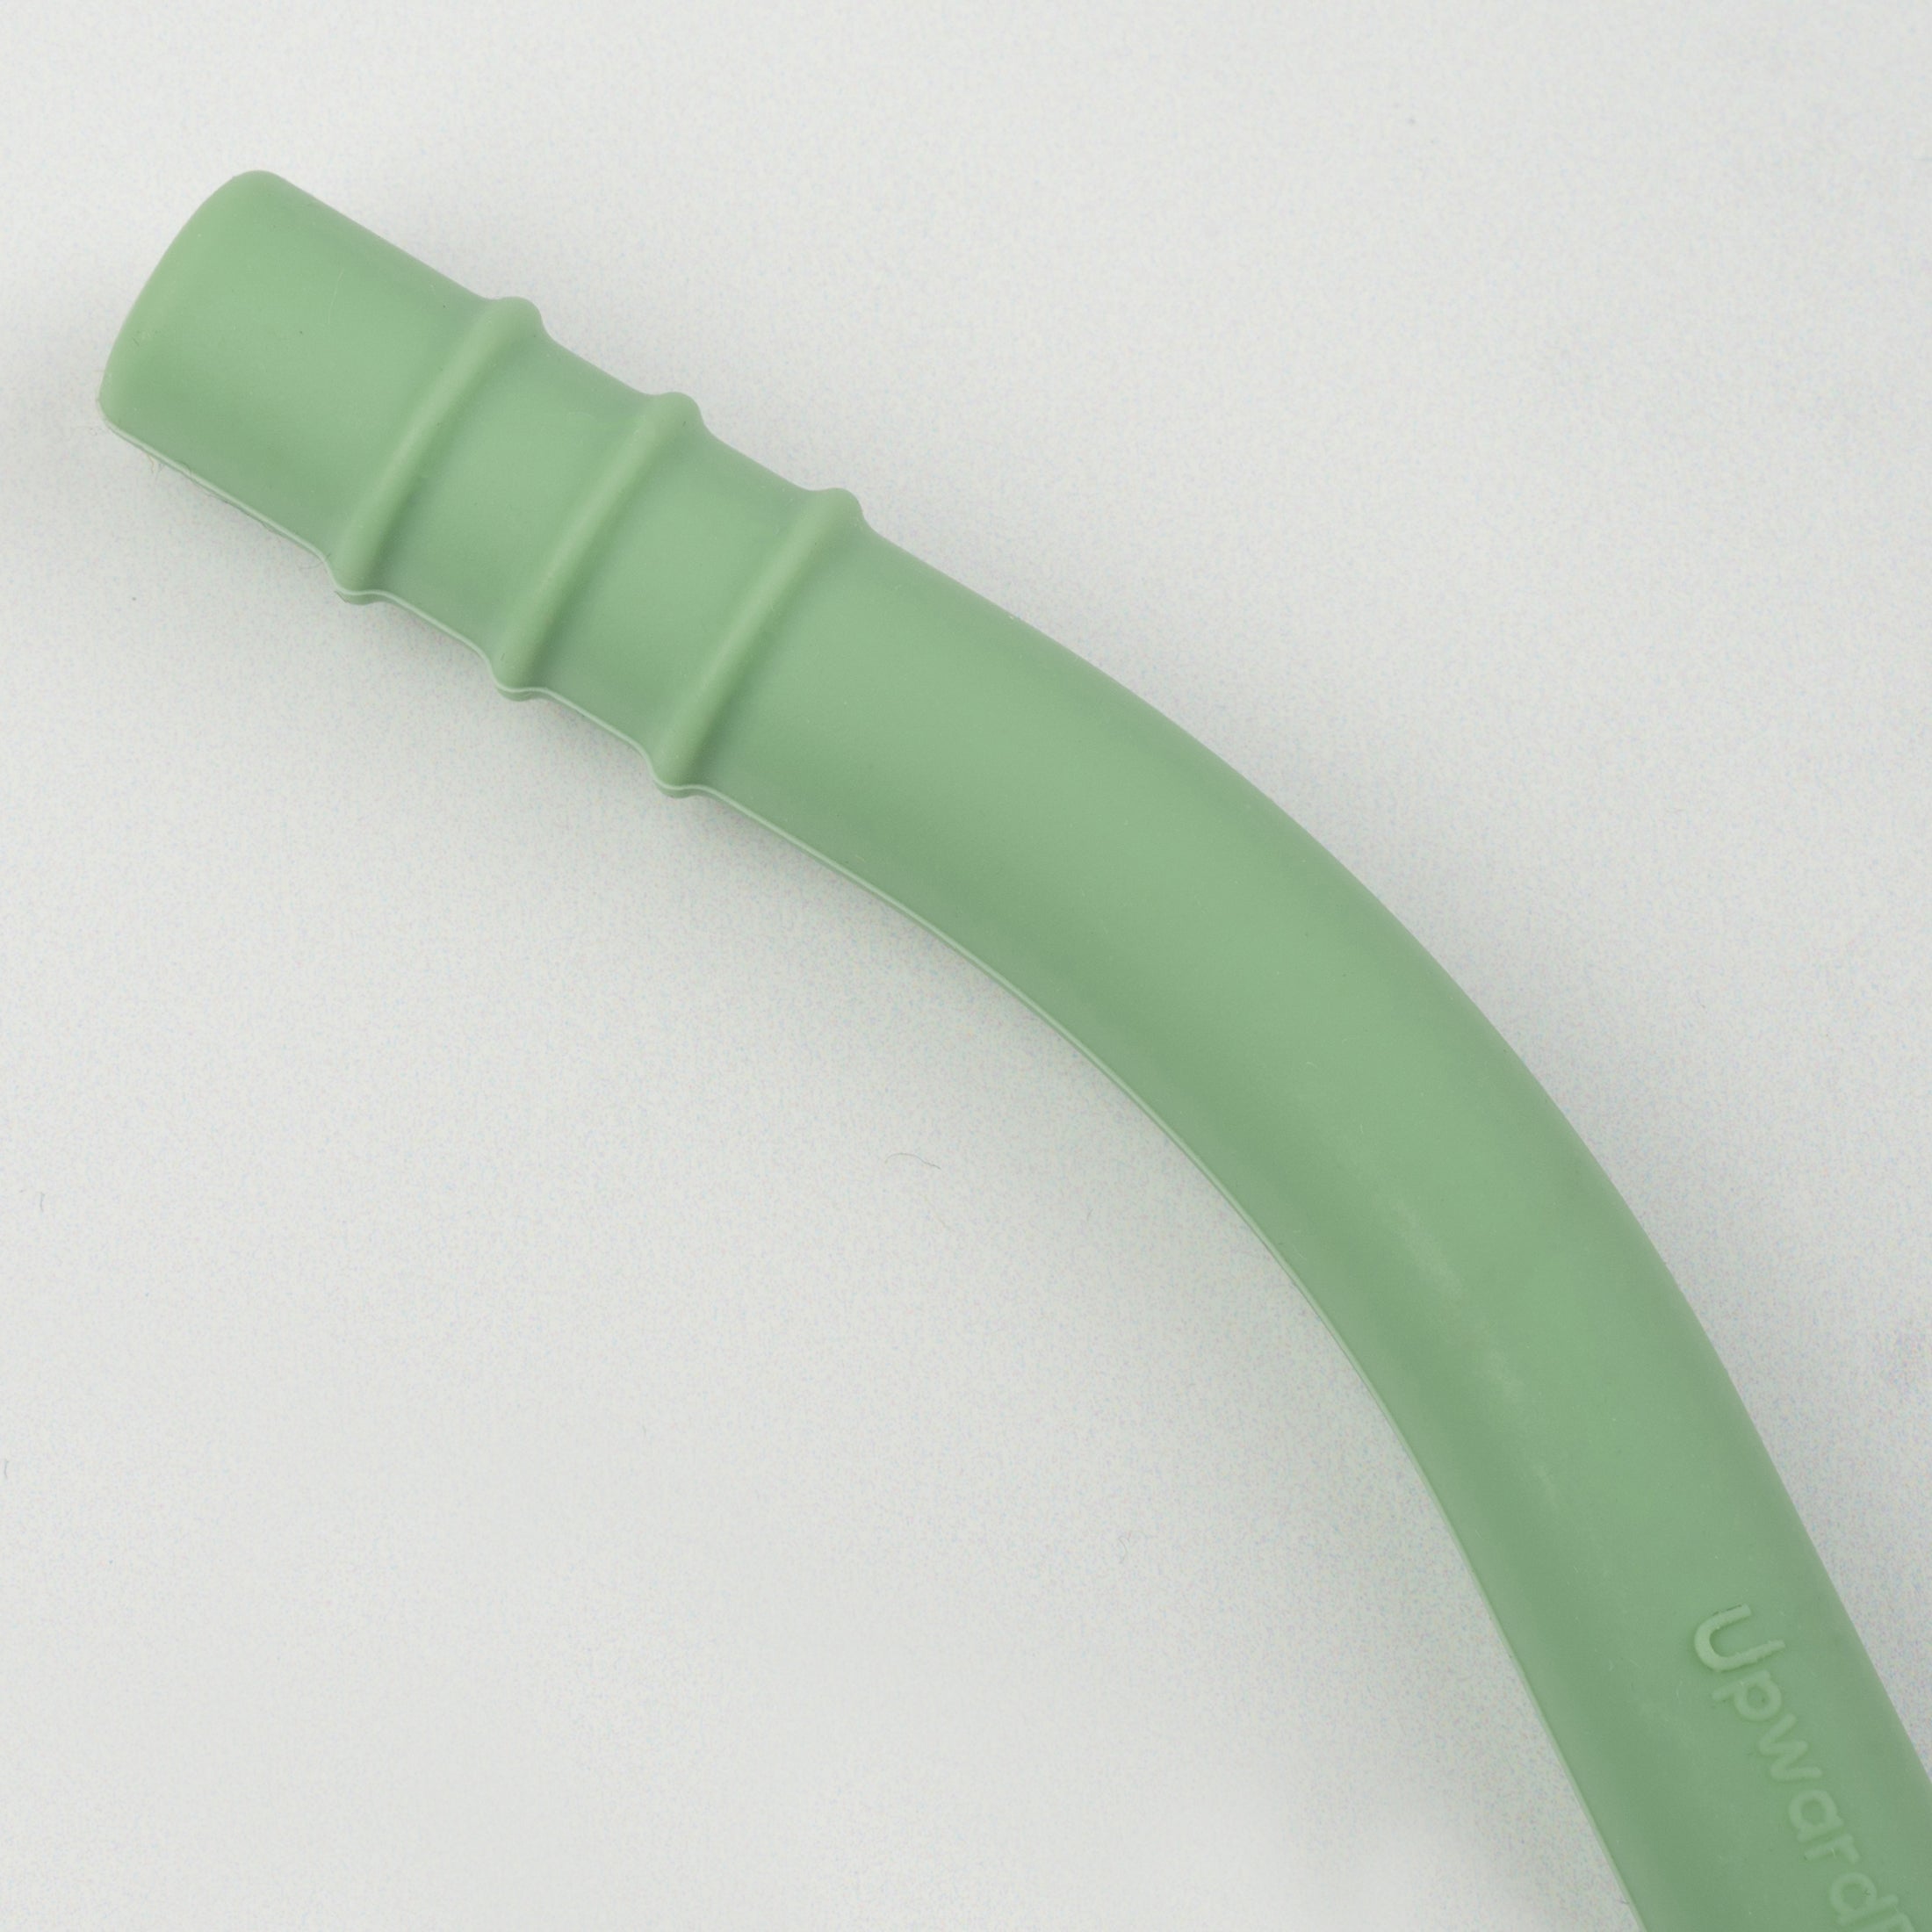 Silicone Straws - 6 Straws and 1 Brush - BPA Free - 100% Food-Grade Silicone - 6m+